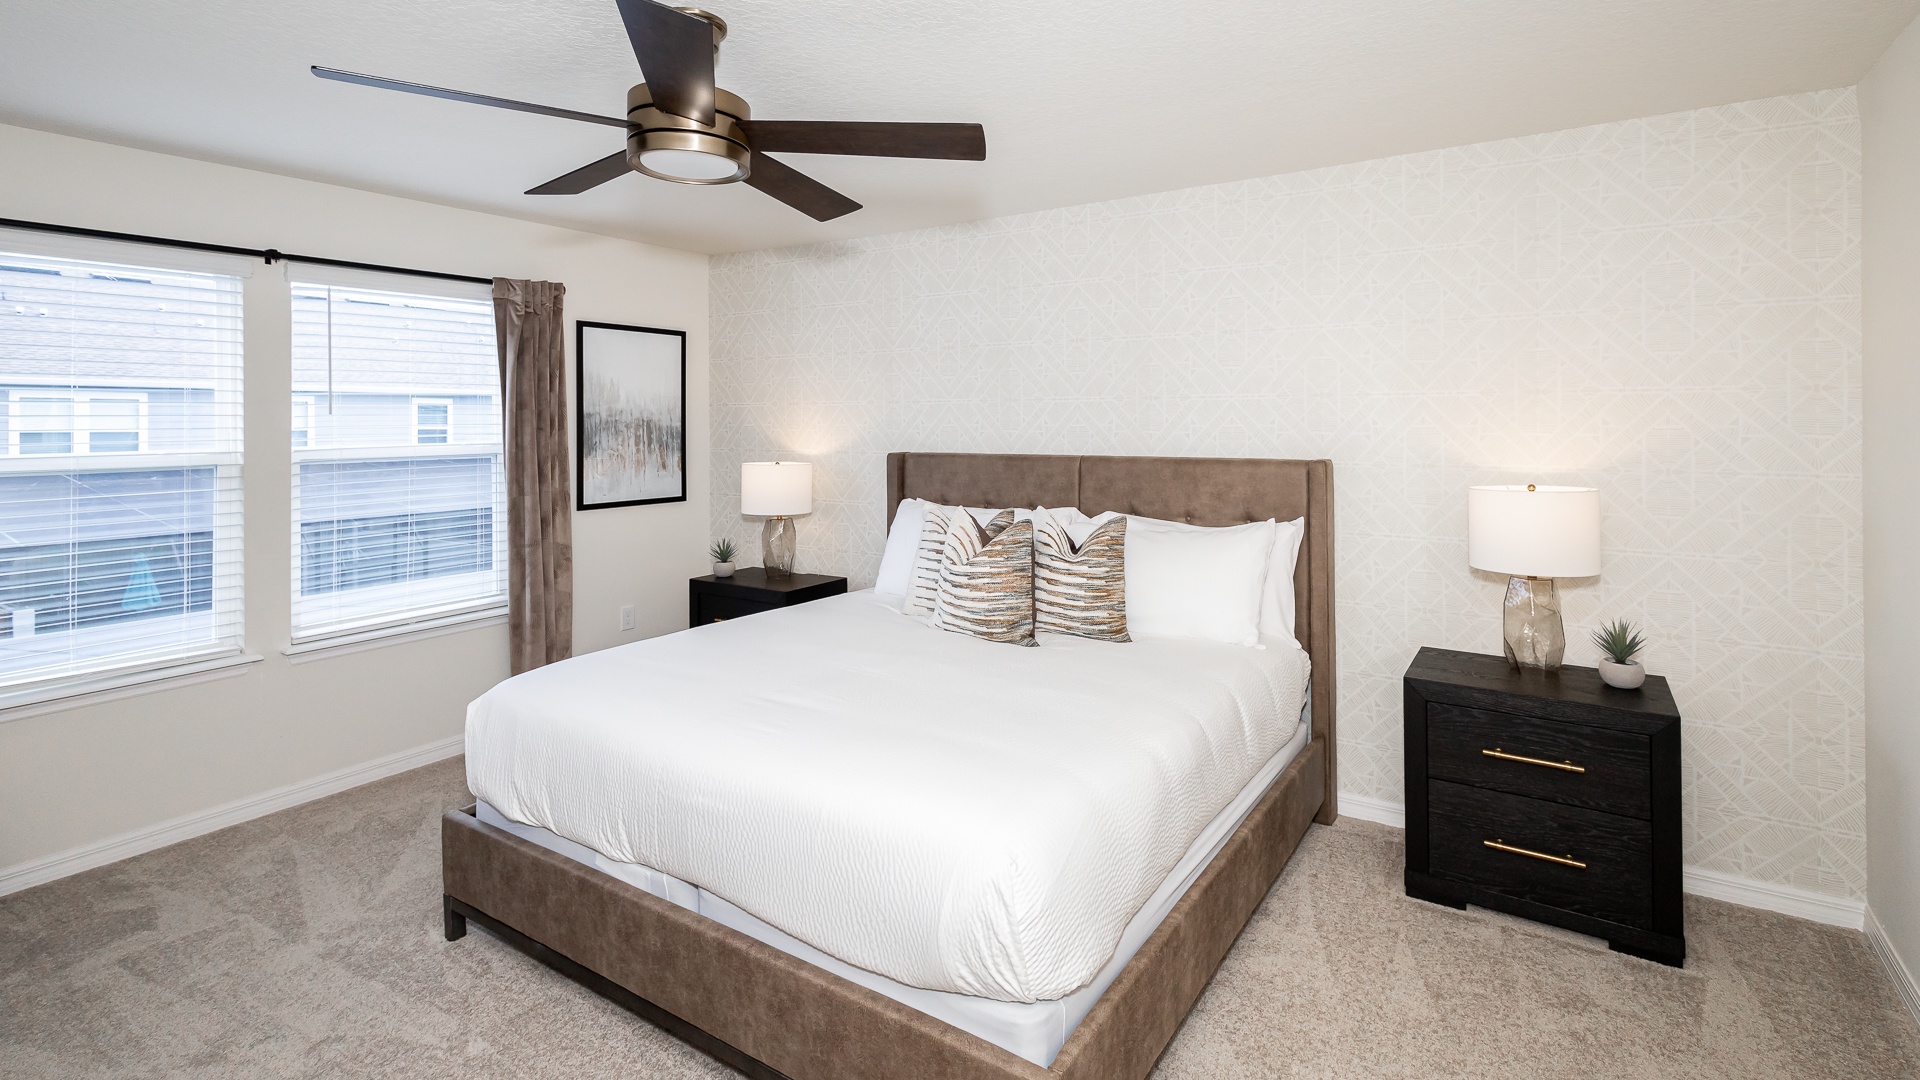 Bedroom 4 offers a king bed, private en suite bath, & TV